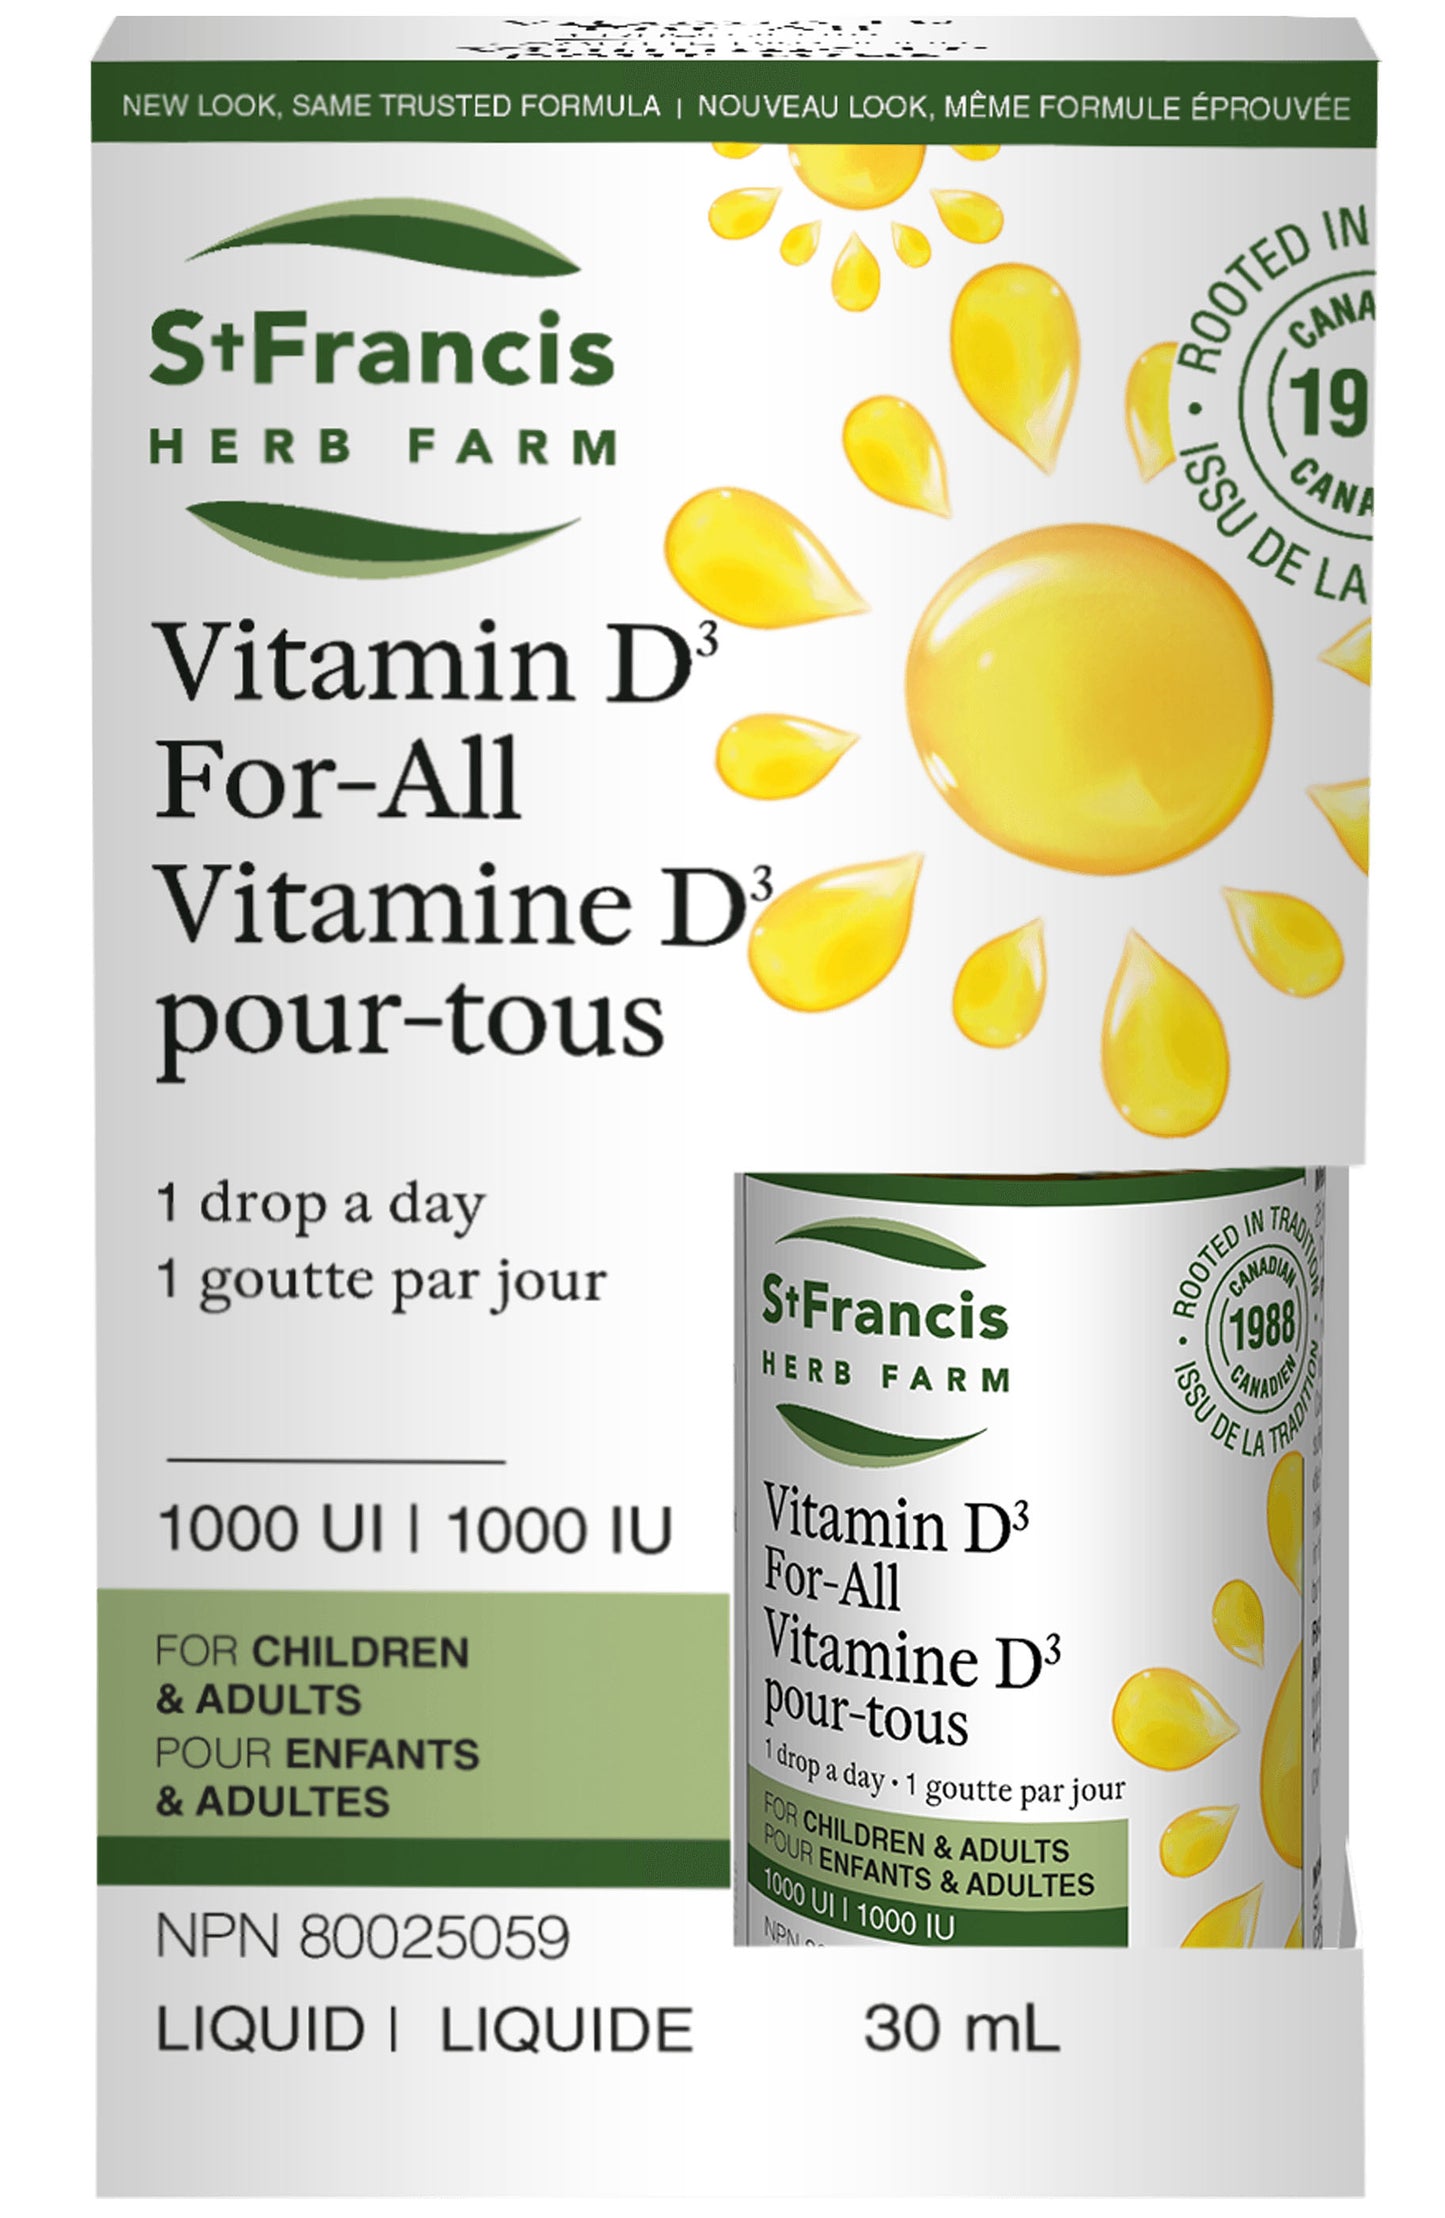 ST FRANCIS HERB FARM Vitamin D for All (1000 IU - 30 ml)